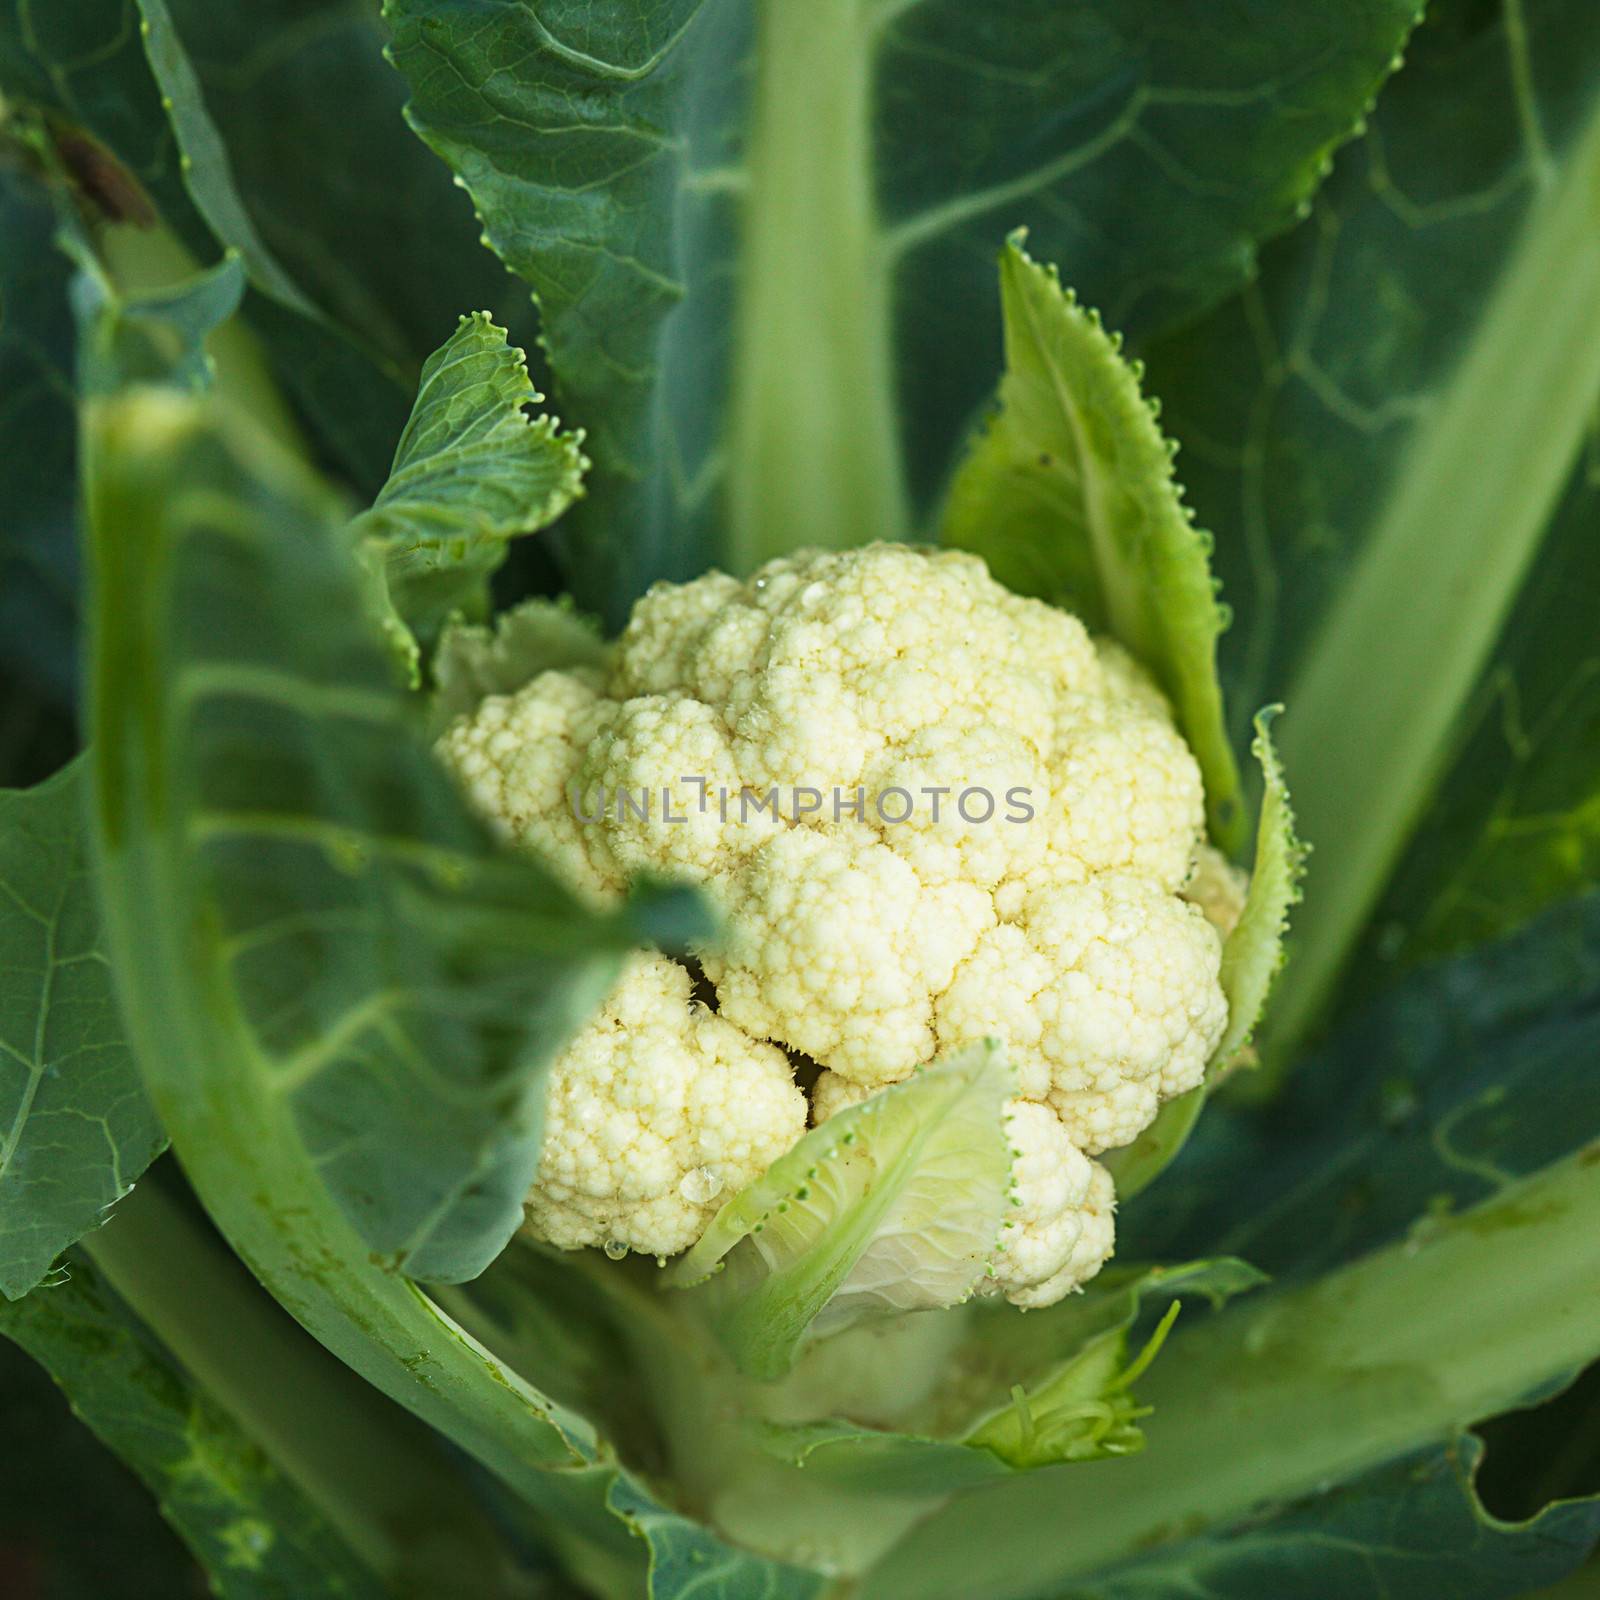 The cauliflower in the garden close up